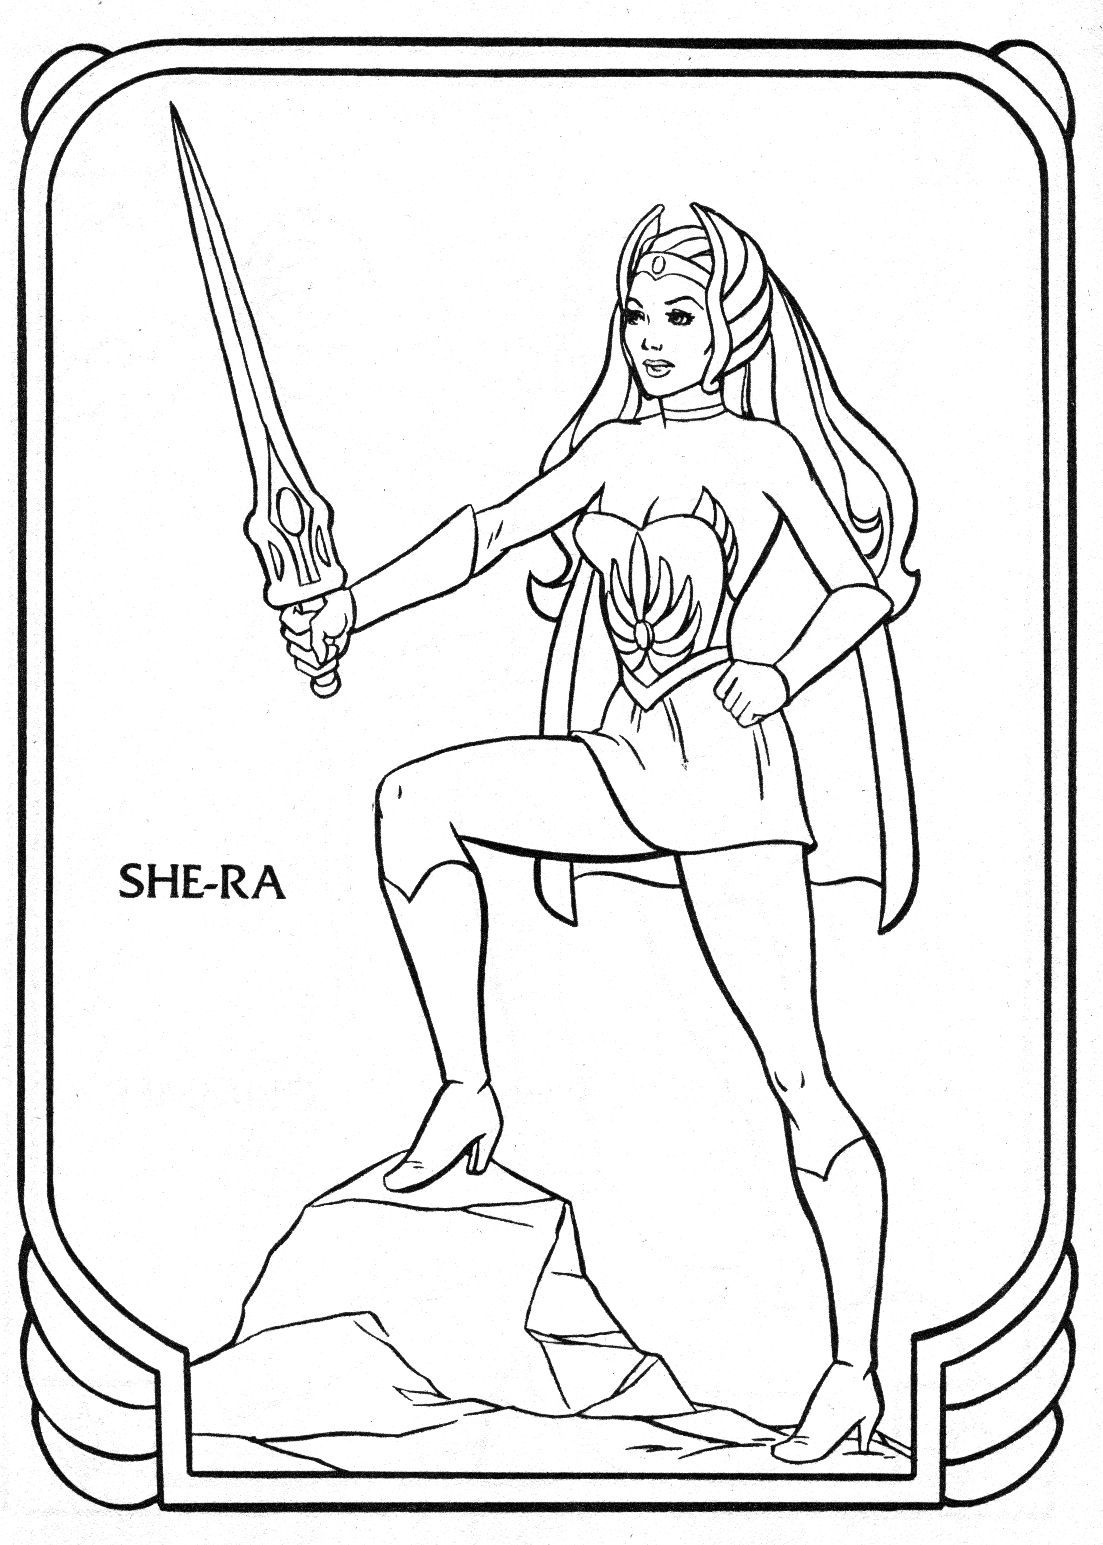 She-Ra: Princess of Power (1985) - coloring book 14